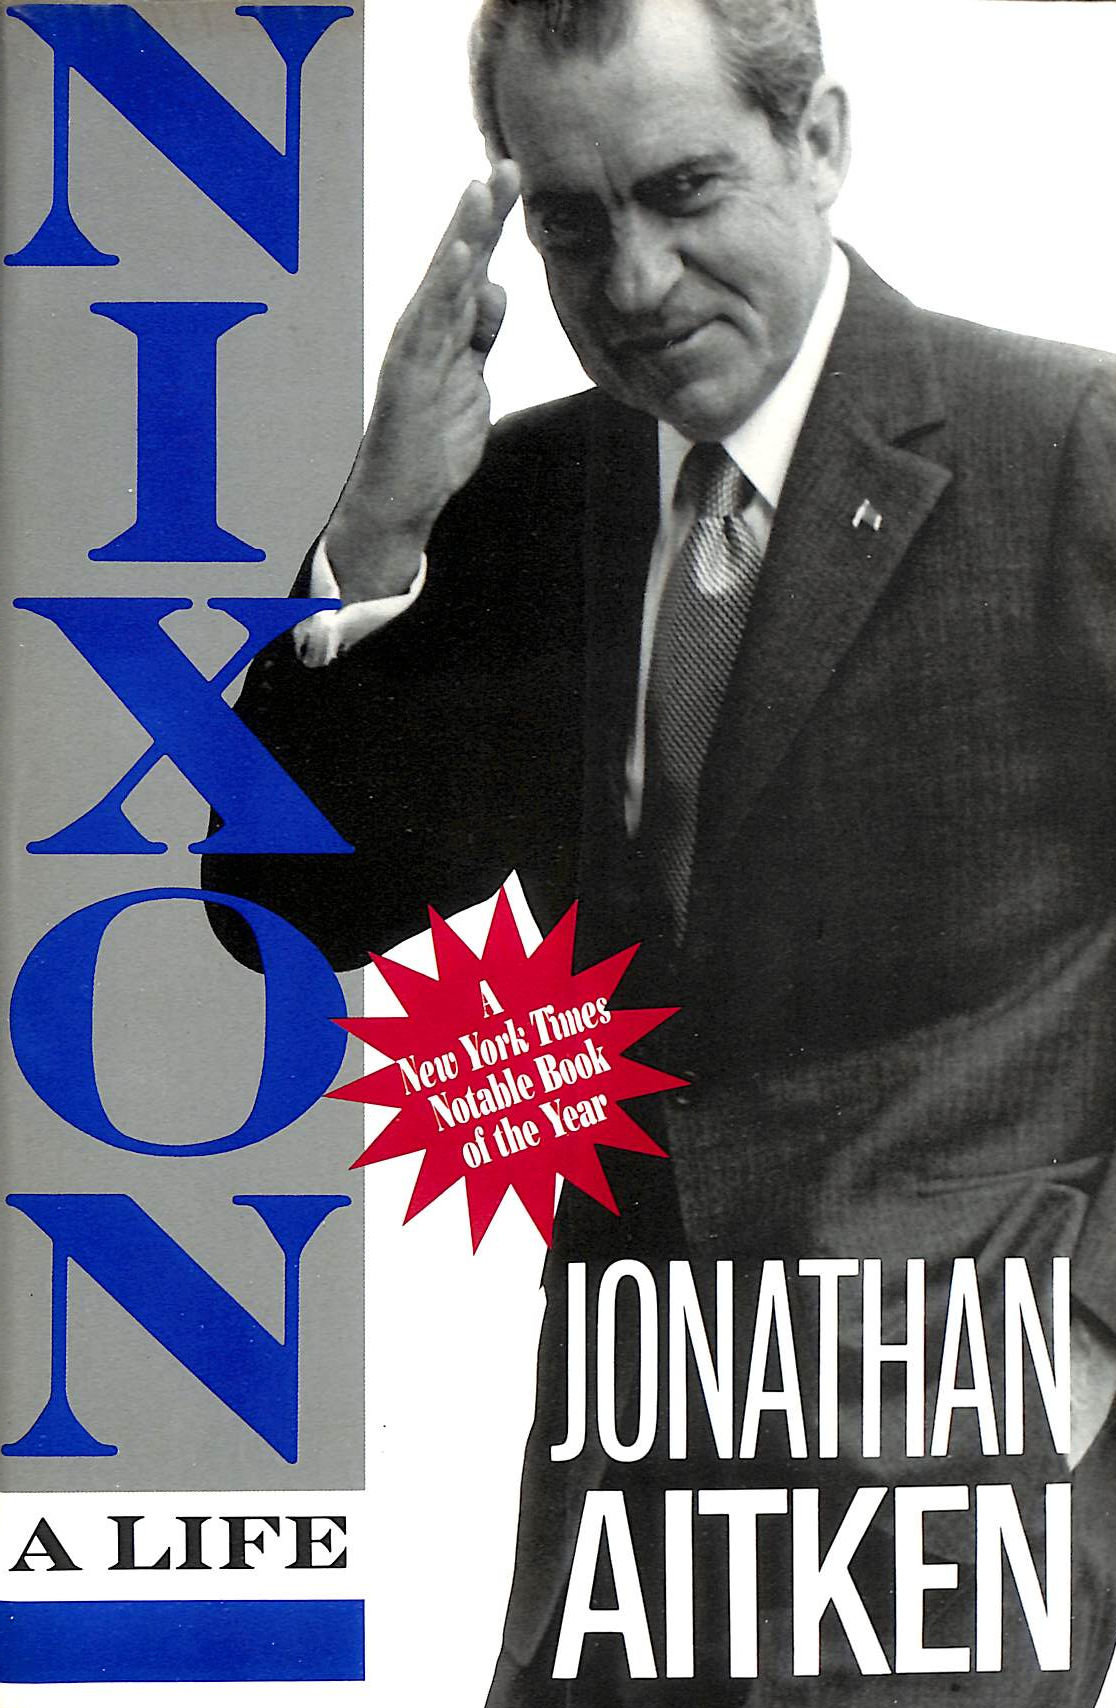 AITKEN, JONATHAN - Nixon: A Life